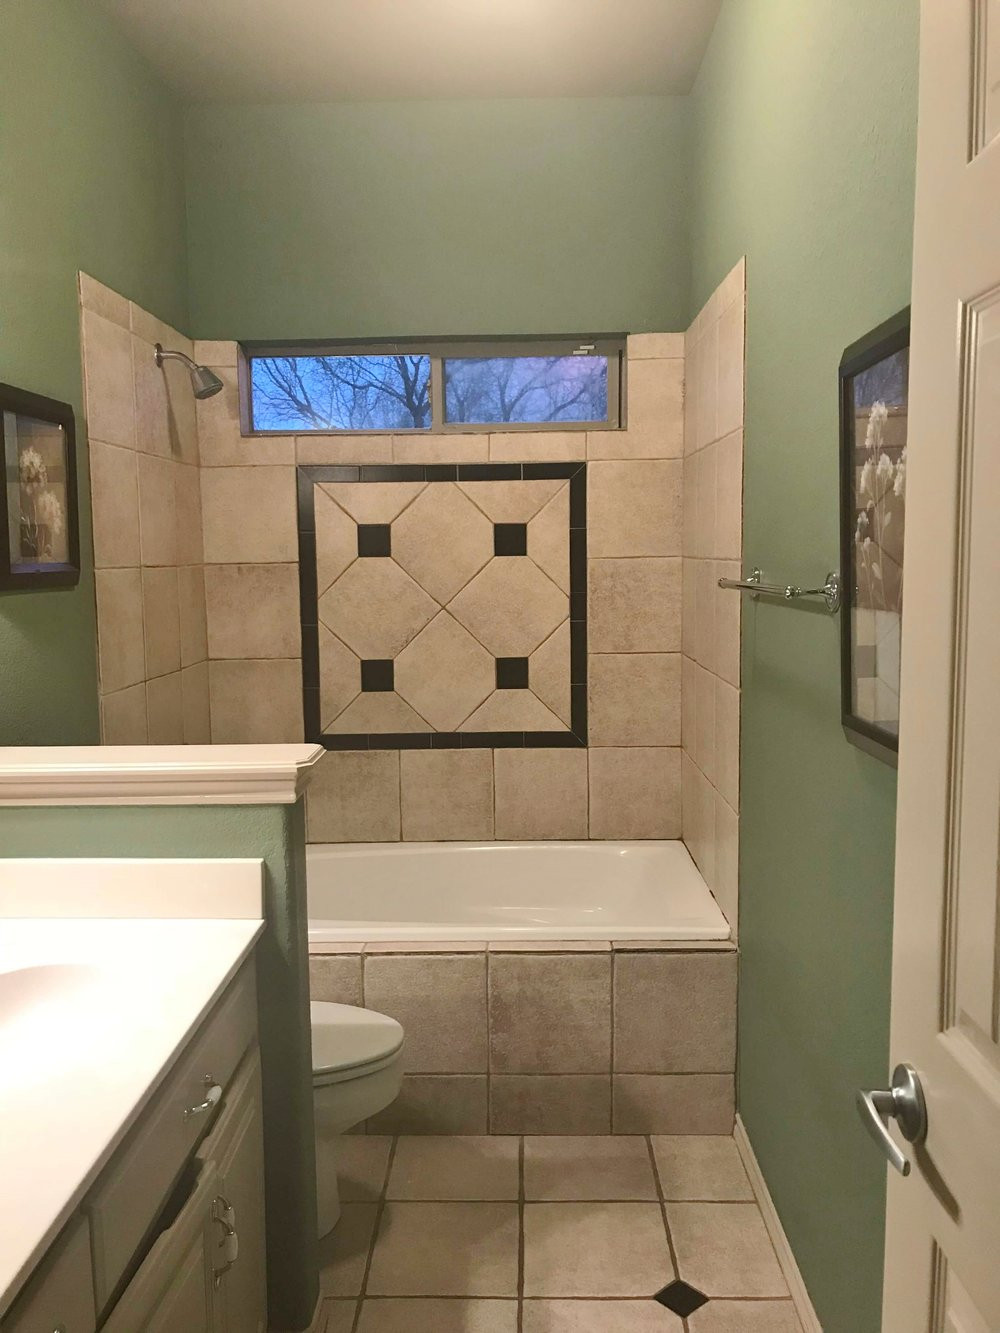 Bathroom Remodel Planner
 Design Plan For A 5 x 10 Standard Bathroom Remodel — DESIGNED